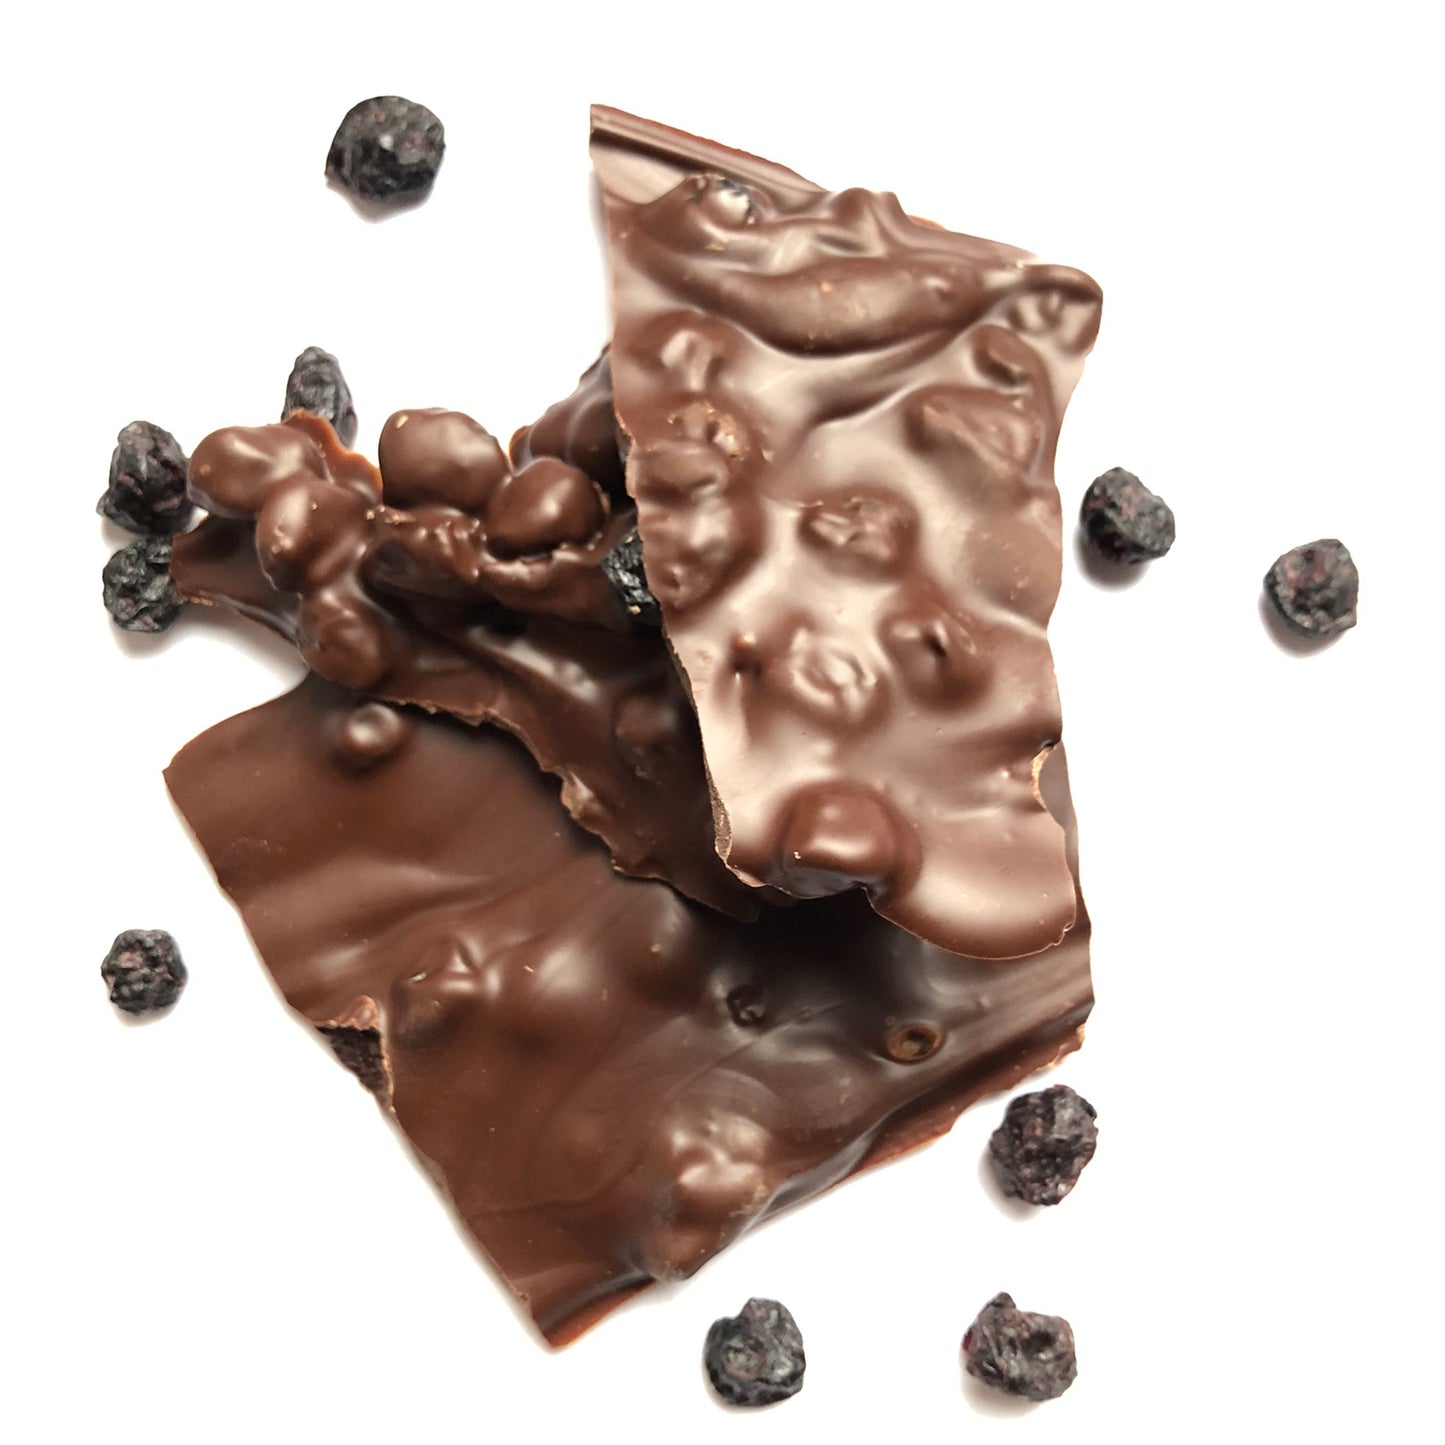 Chocolate Bark - Blueberry